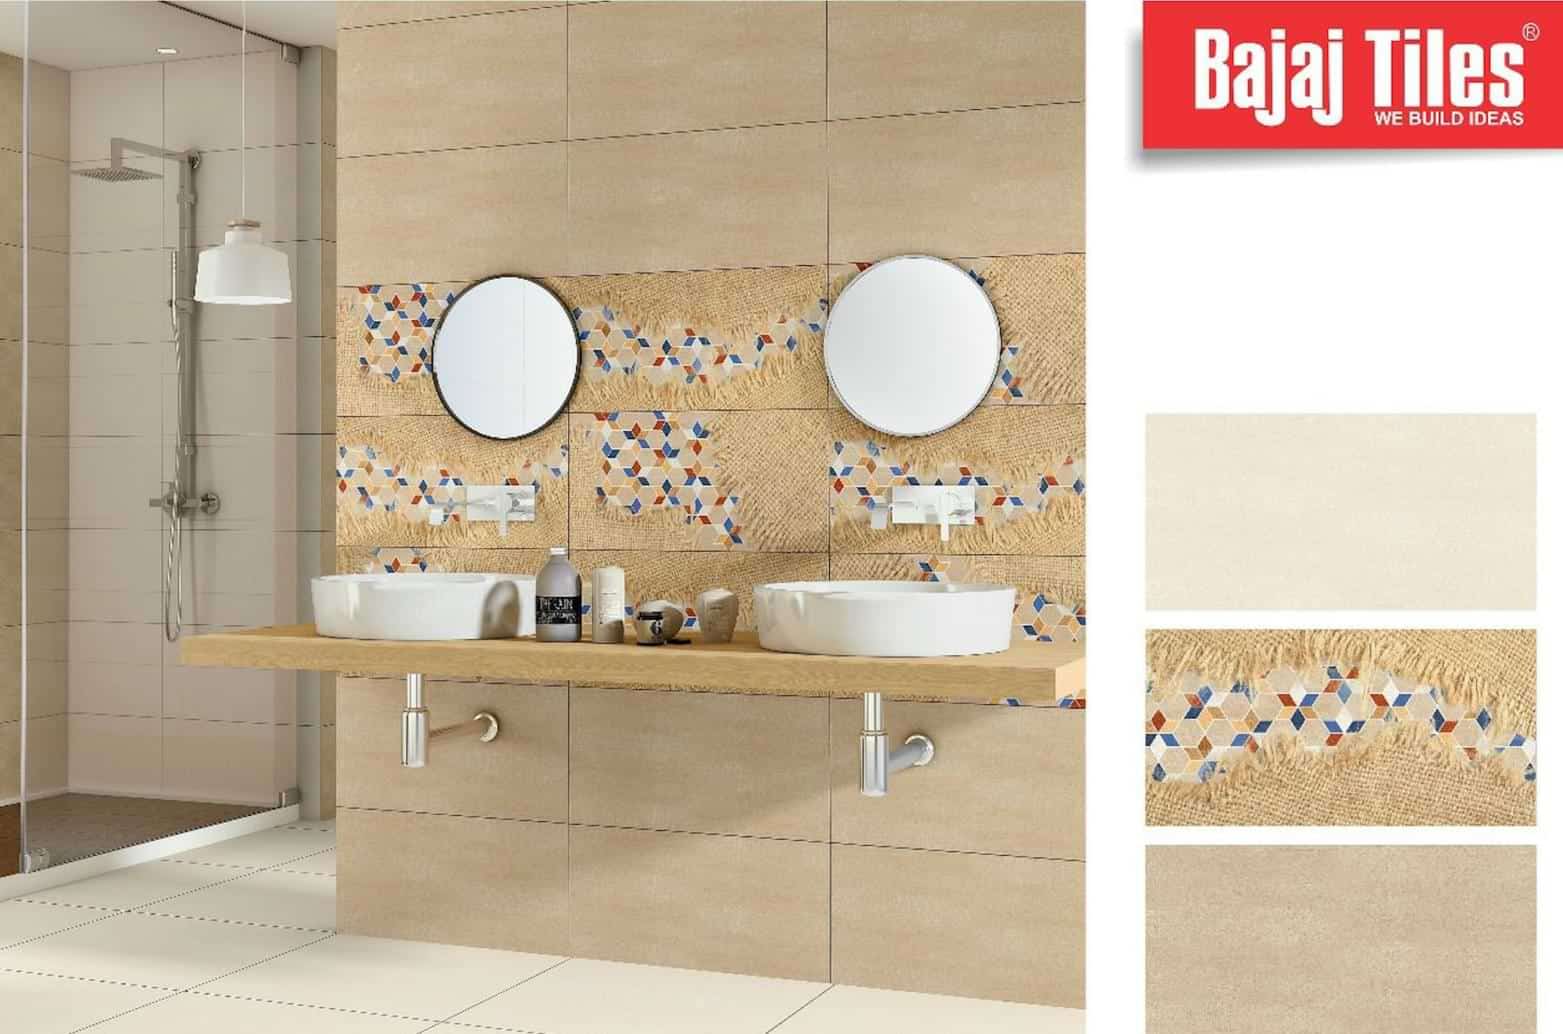 Bajaj tiles with logo and bathroom sink in cream colour